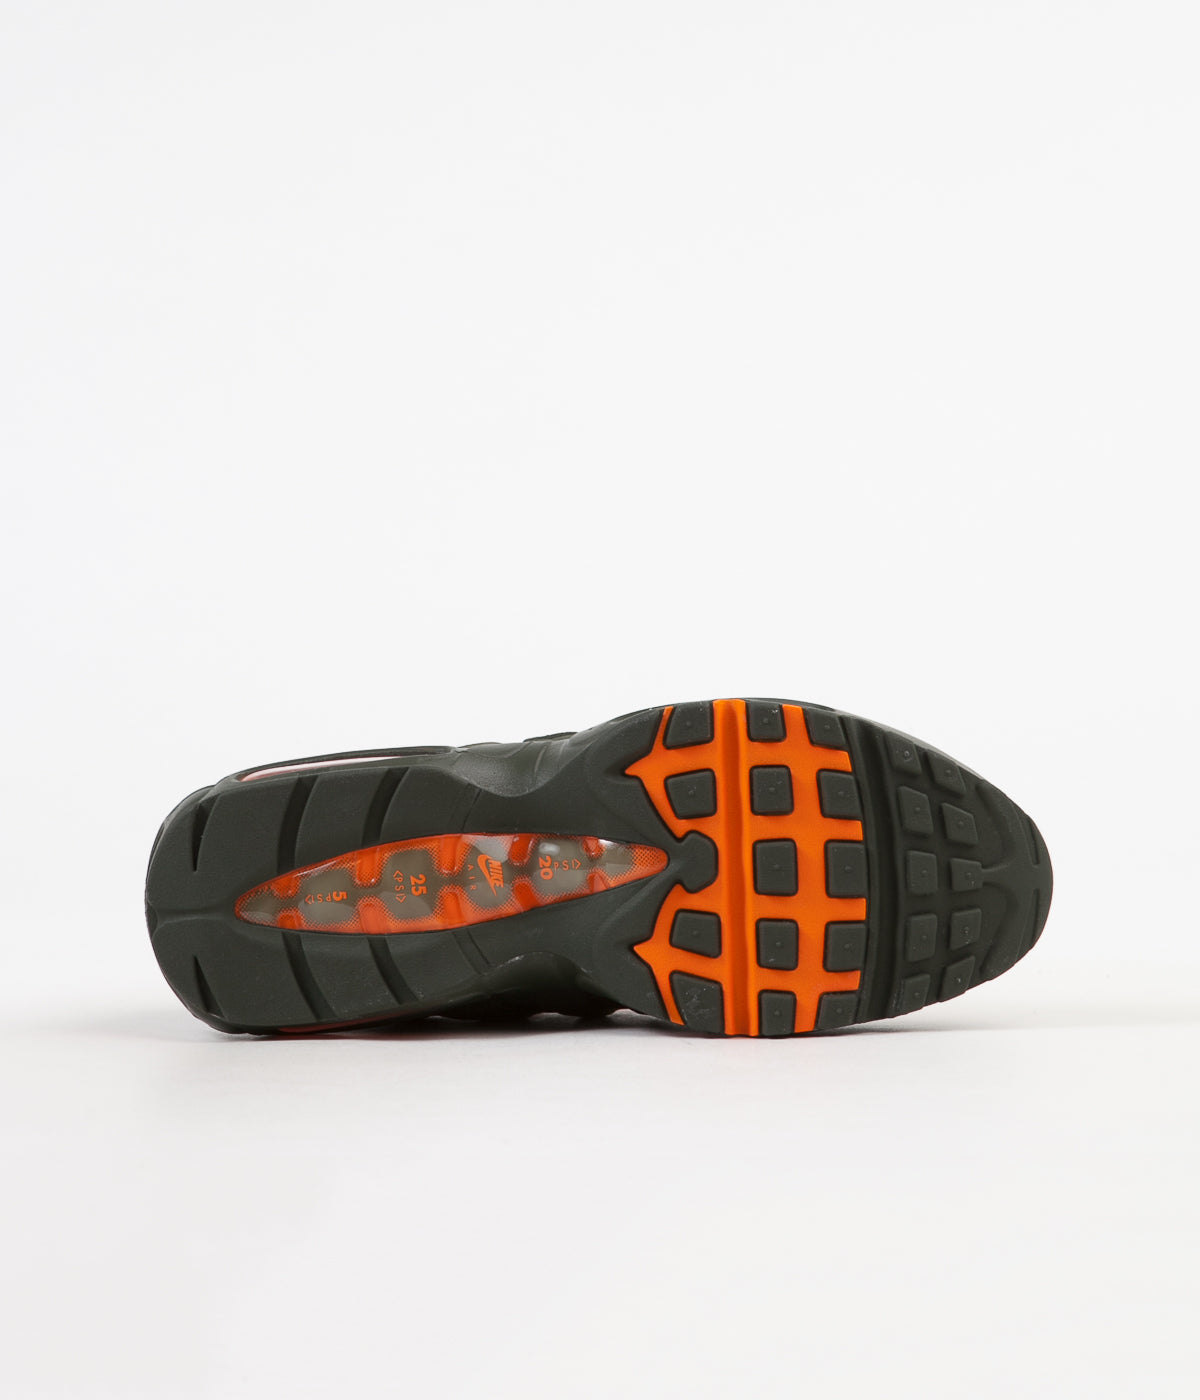 Nike Air Max 95 OG Shoes - String / Total Orange - Neutral